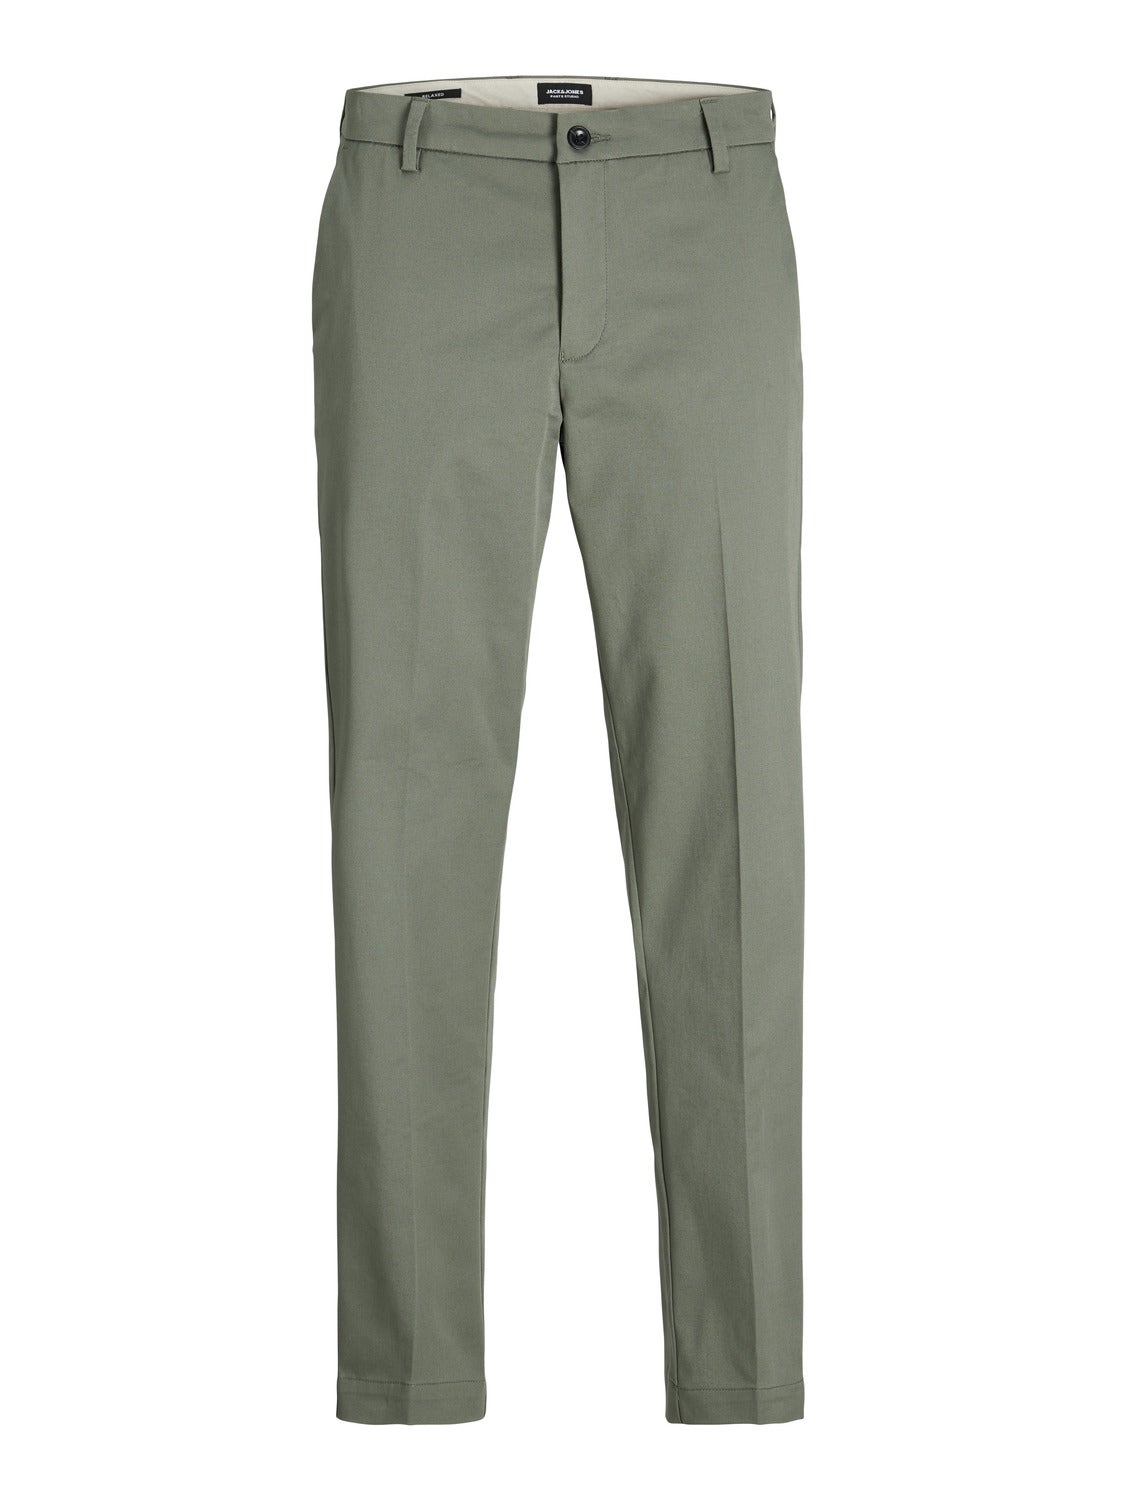 Men's Green Donegal Tweed Pants | Peter Christian